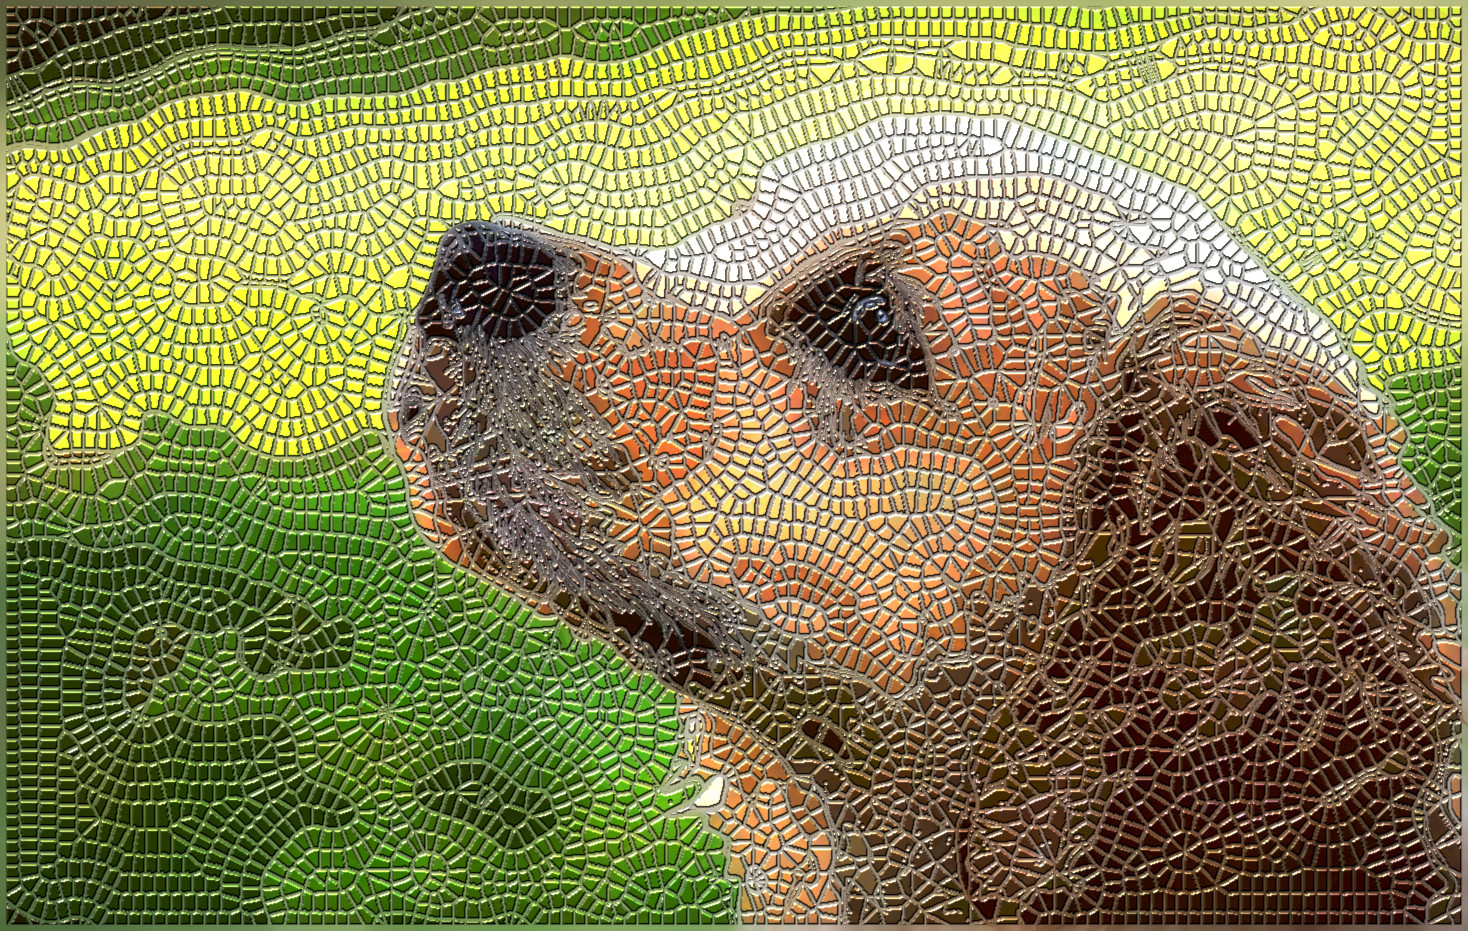 2023-09-14 14-53-45 dog-4390885_1920, as a Roman Mosaic  (parms=20,1,0,4,12,11,0,1).jpeg